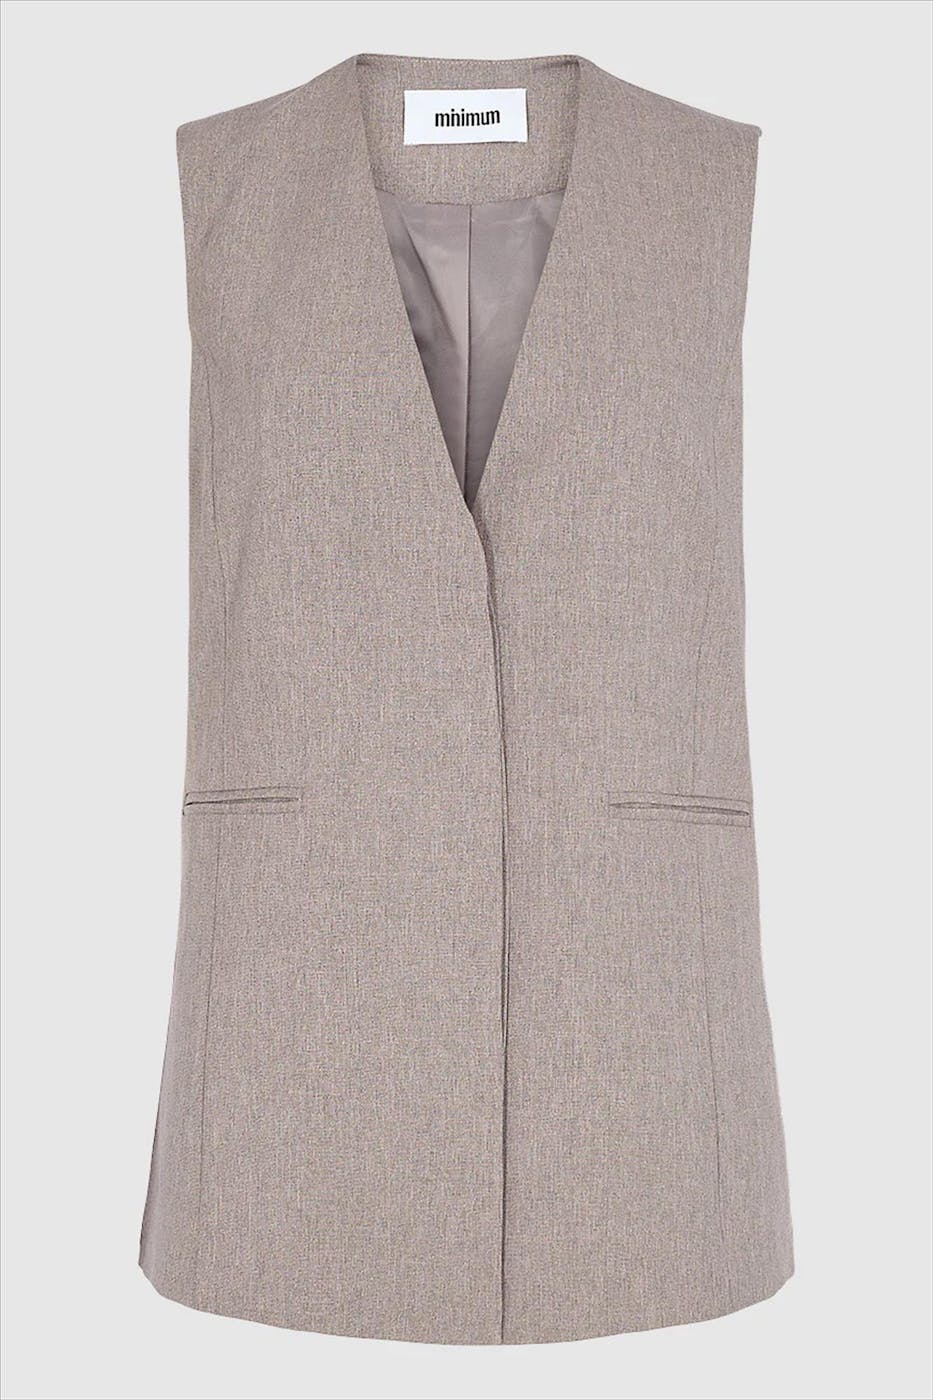 Minimum - Bruine Blikka waistcoat